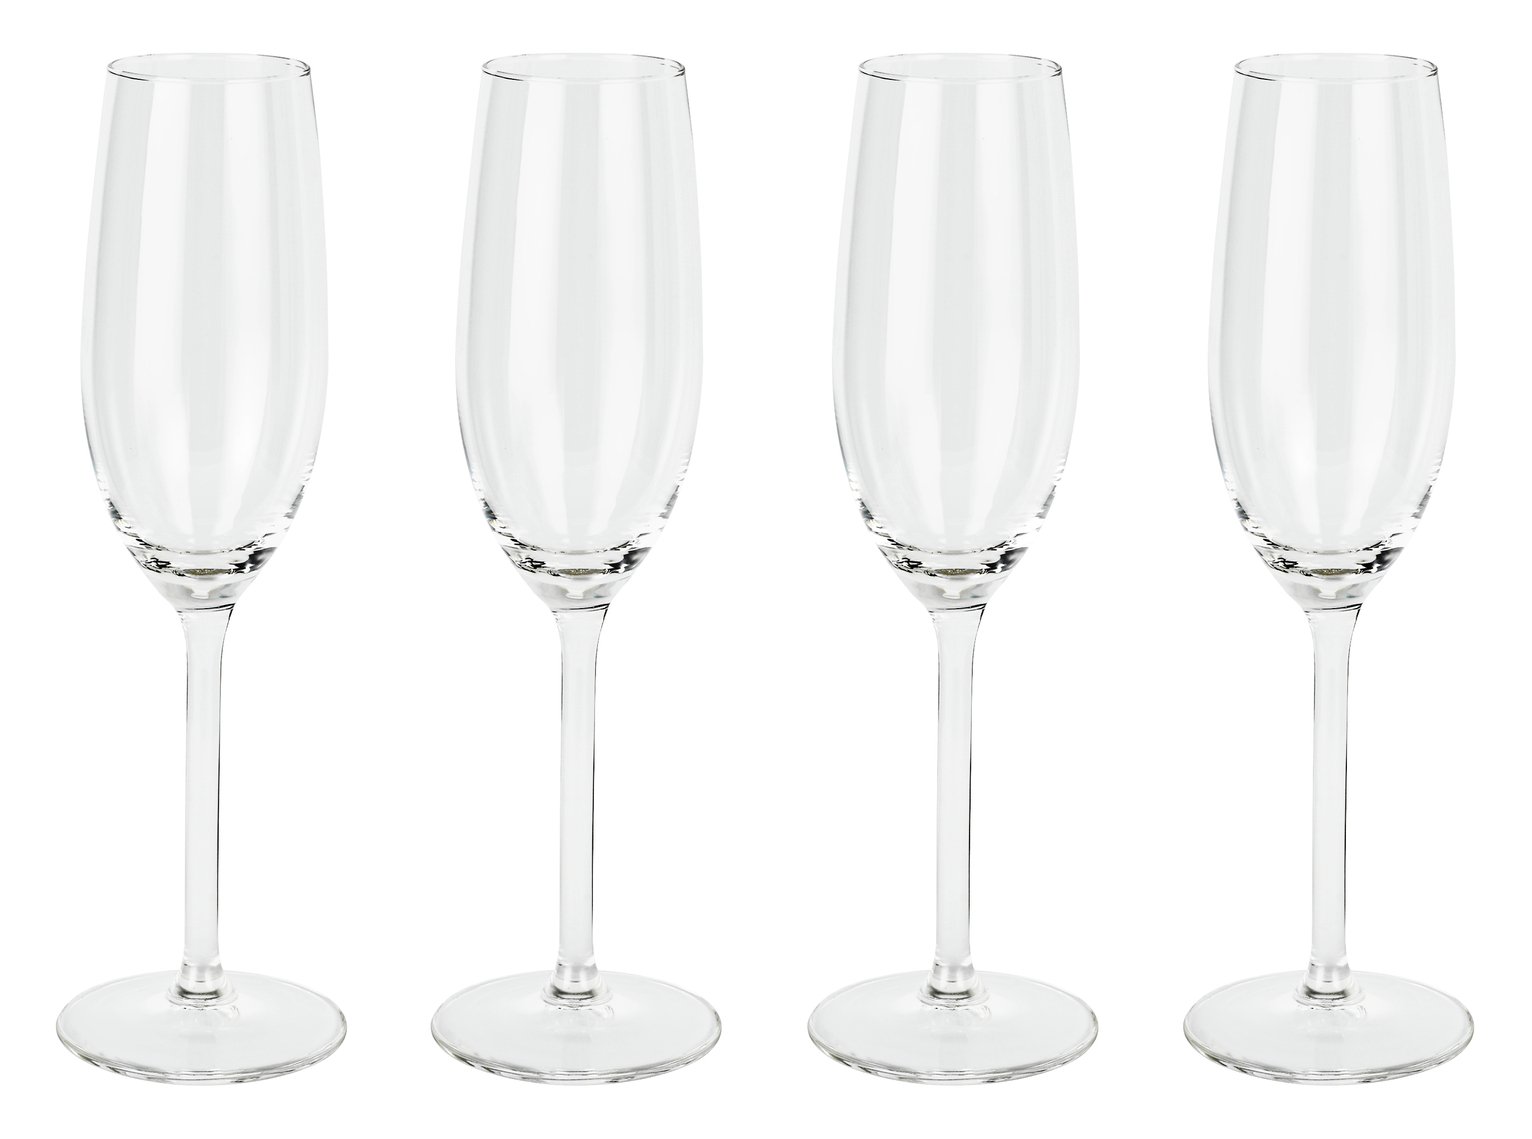 4 champagne glasses